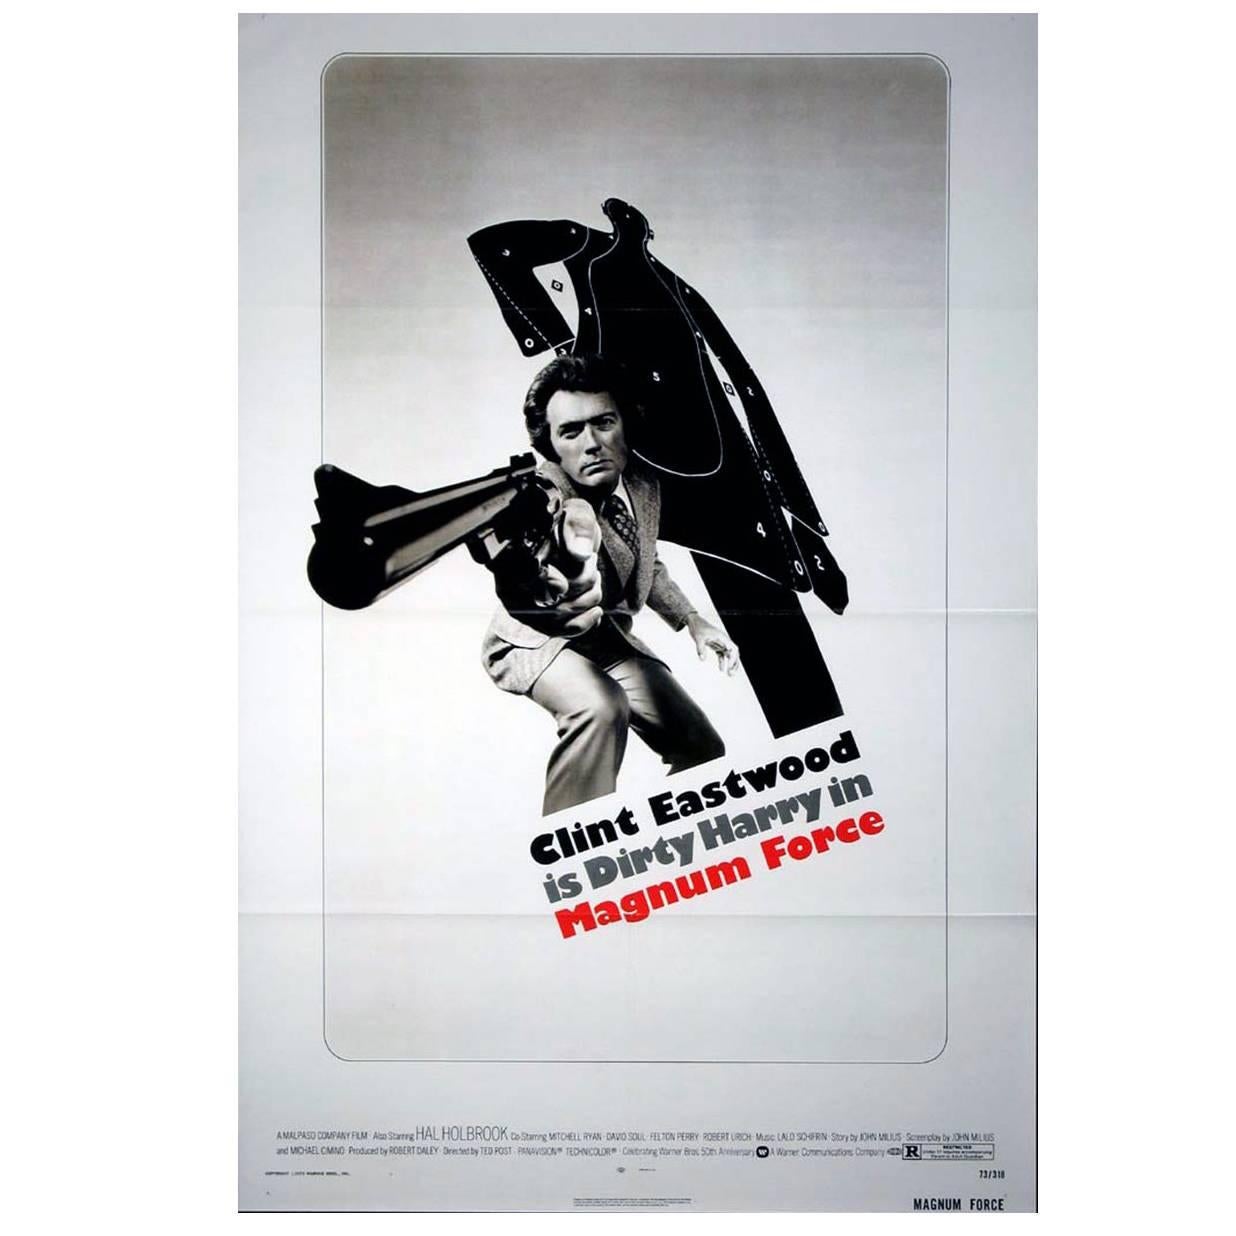 "Magnum Force" Film Poster, 1973